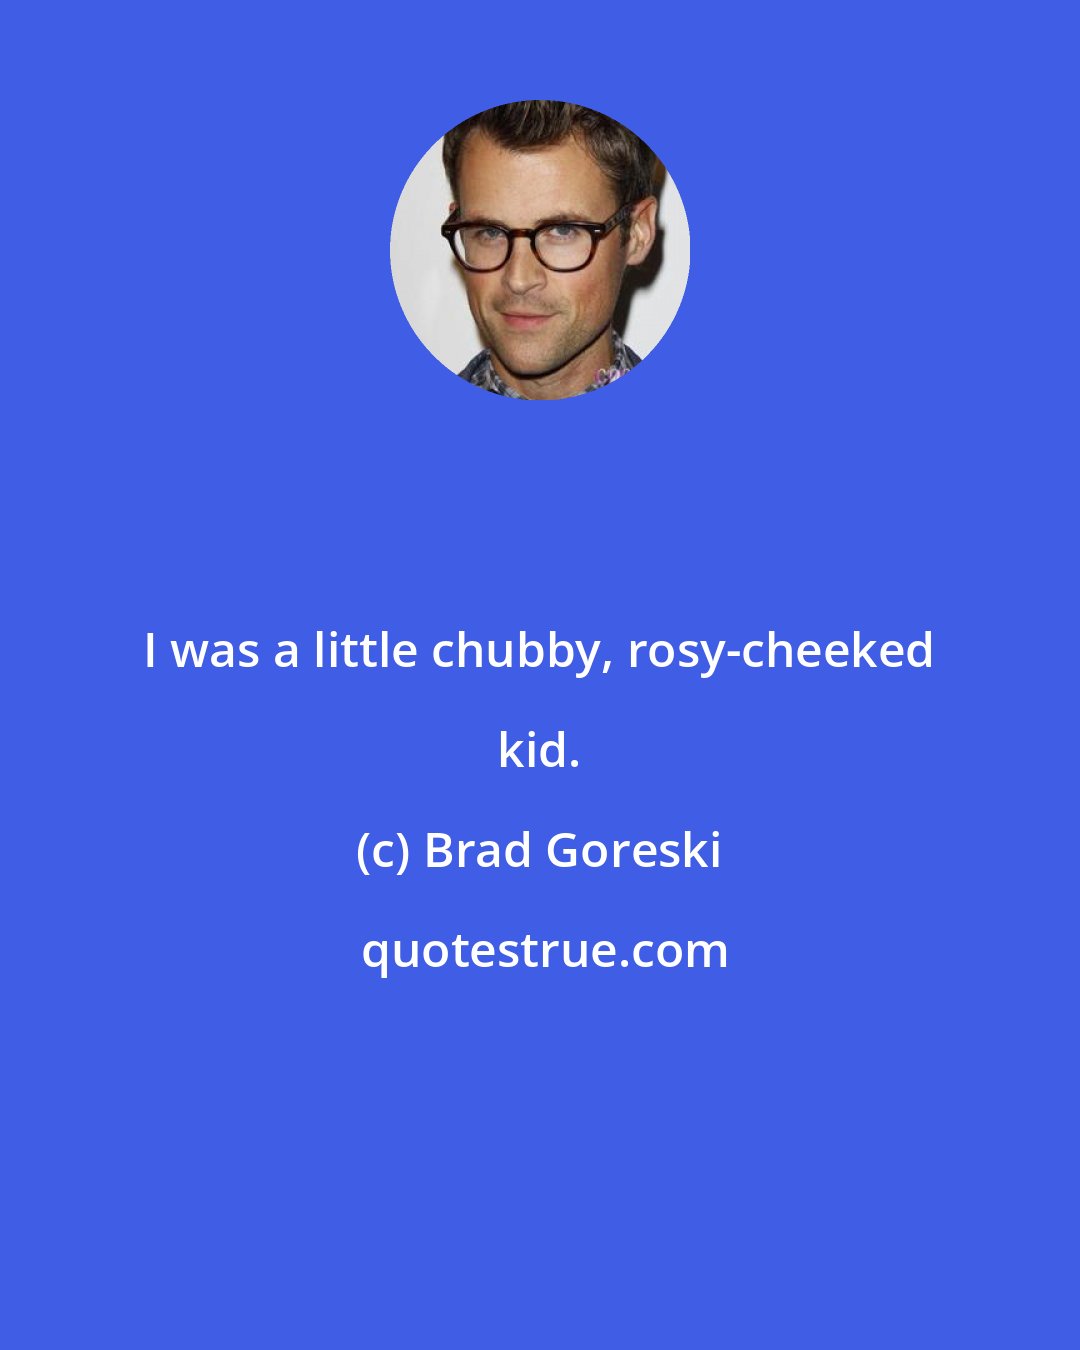 Brad Goreski: I was a little chubby, rosy-cheeked kid.